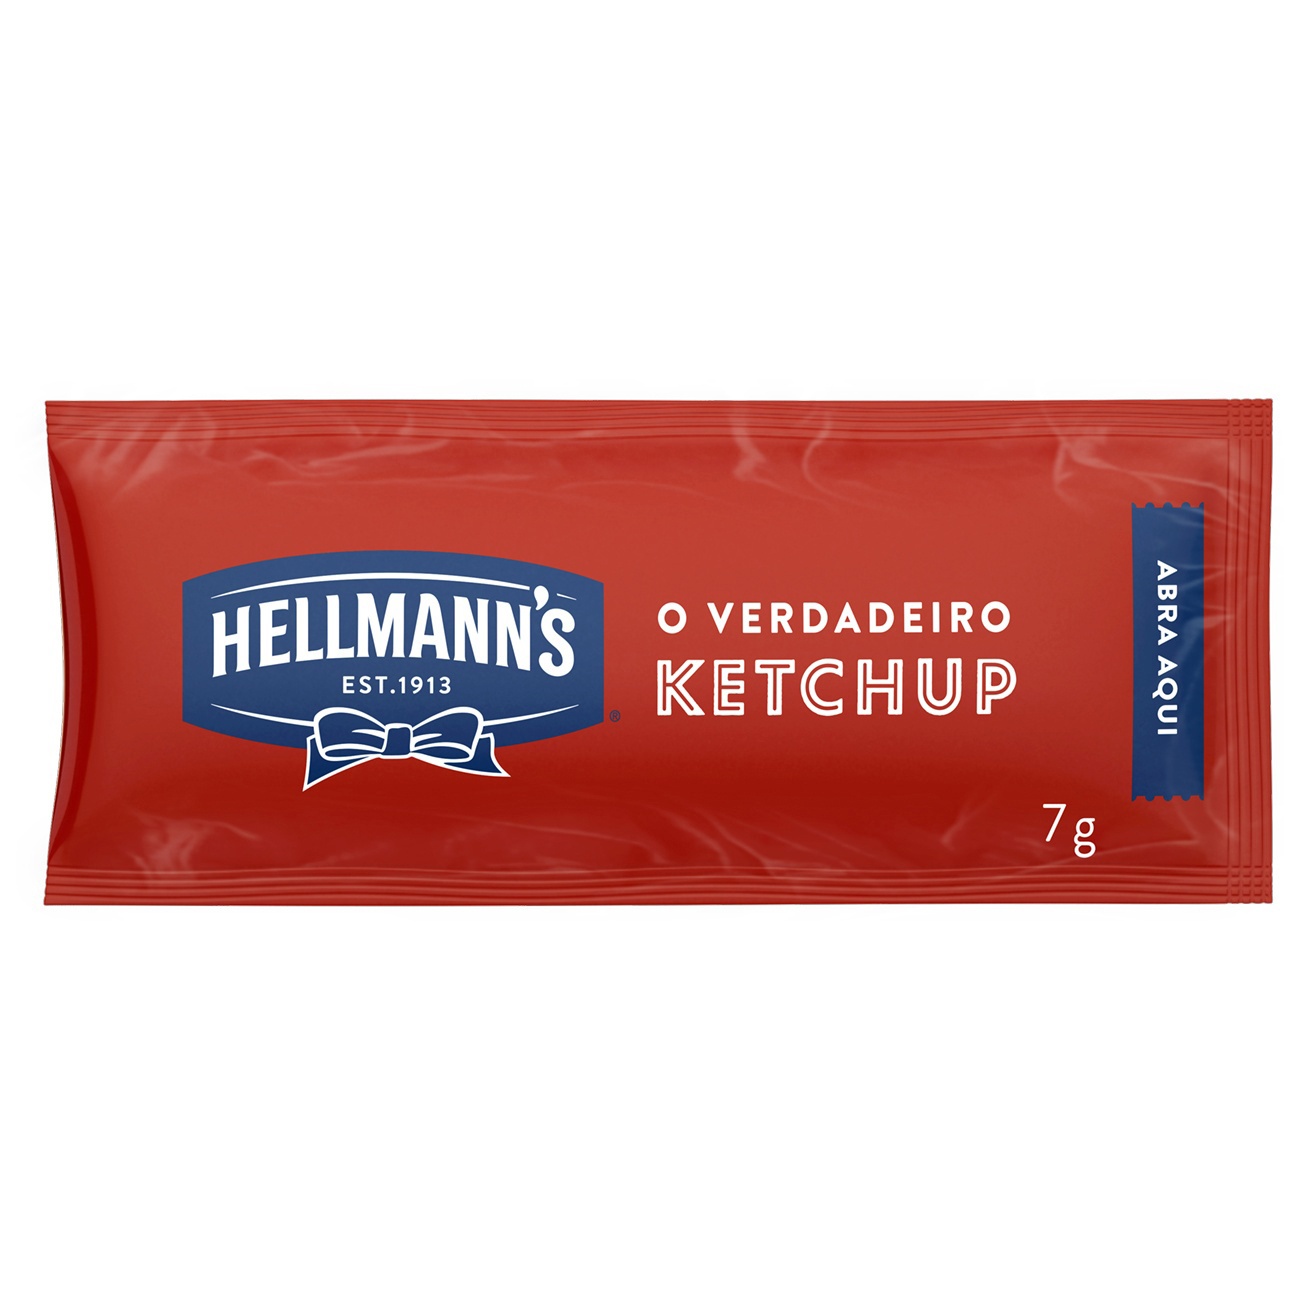 Ketchup Hellmann's Sachê 168 x 7g